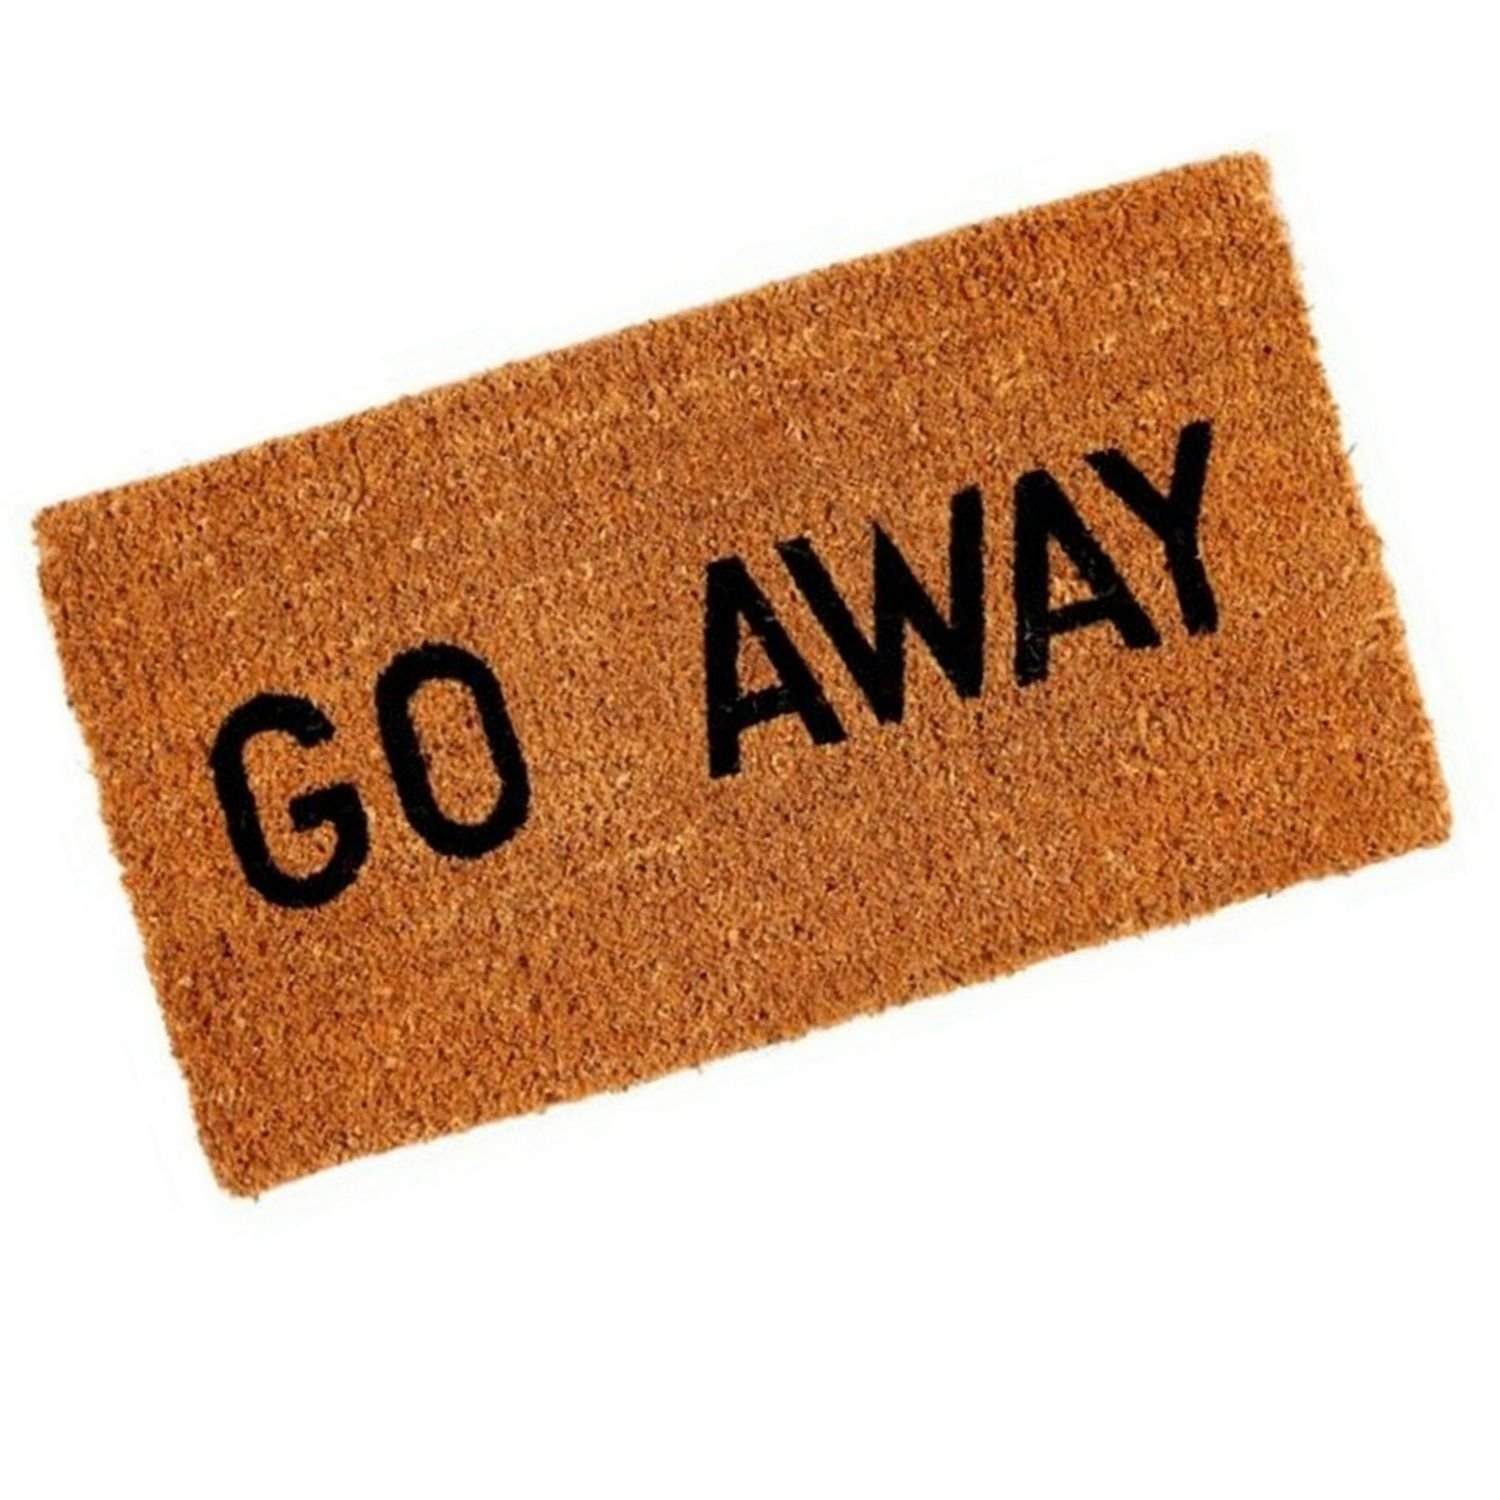 New go away. Go away картинка. Go away картинка для детей. Go away Doormat. Надпись go away.